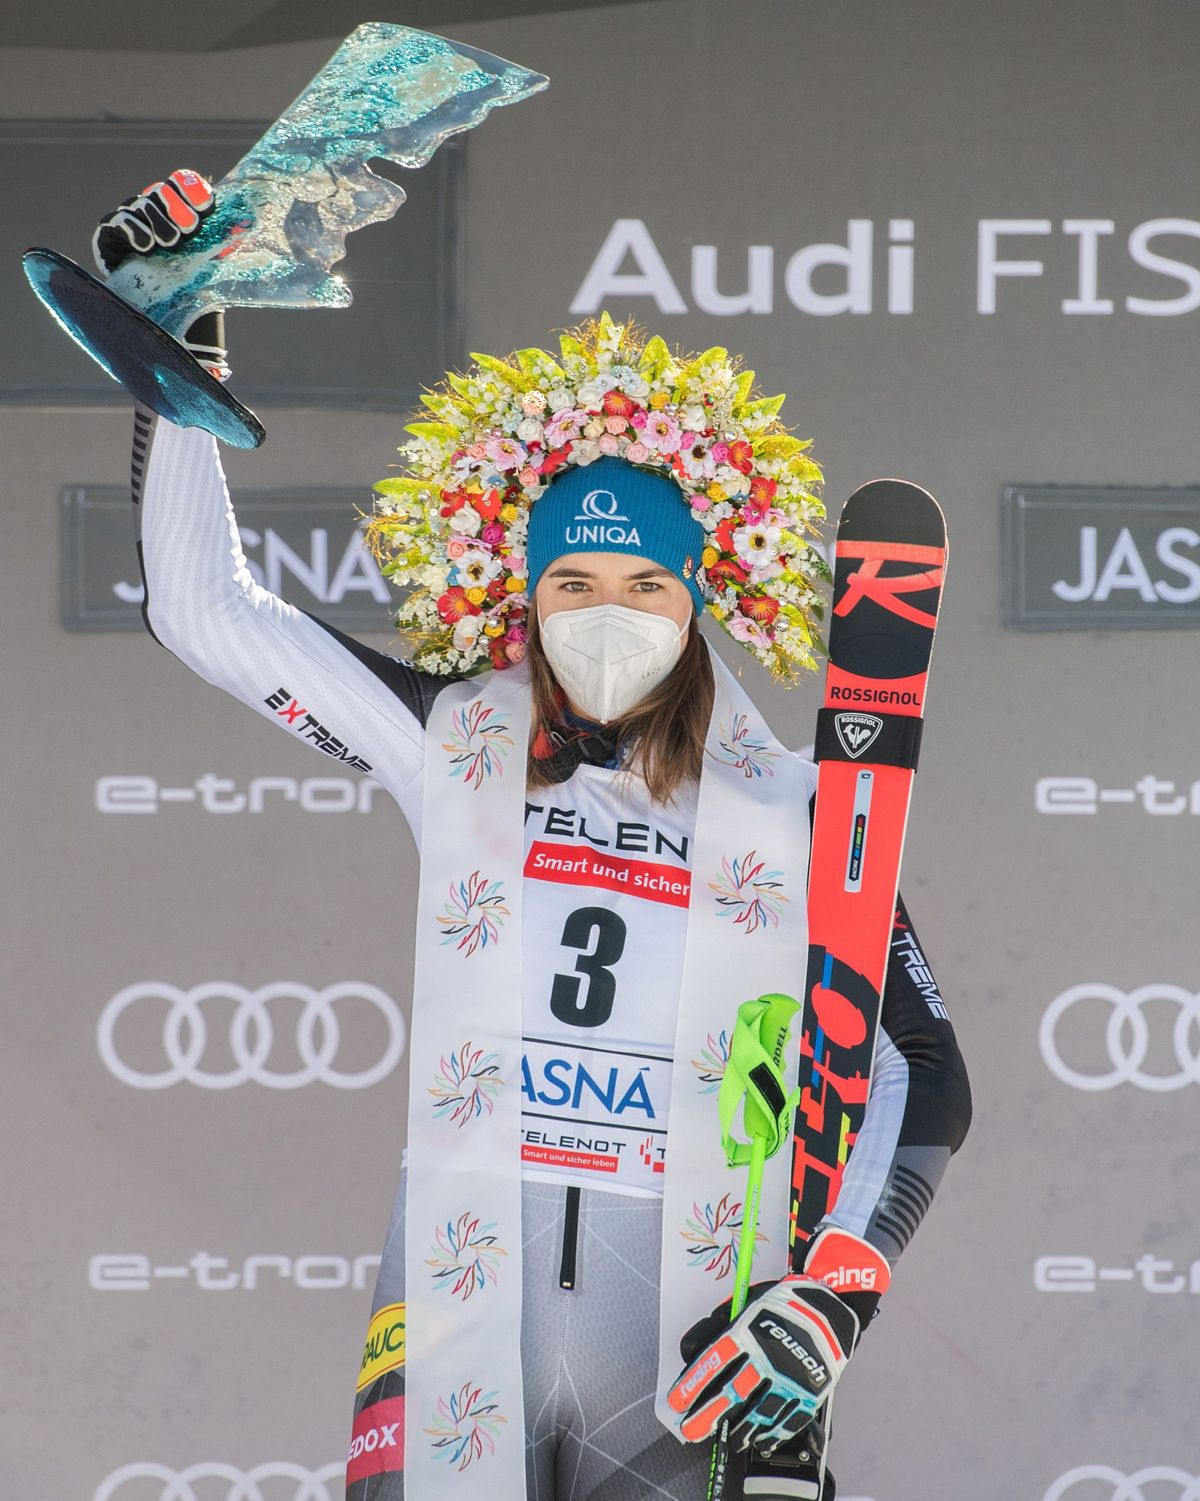 Vlhova Wins World Cup Giant Slalom Near Birthplace: "I Burst Into Tears"